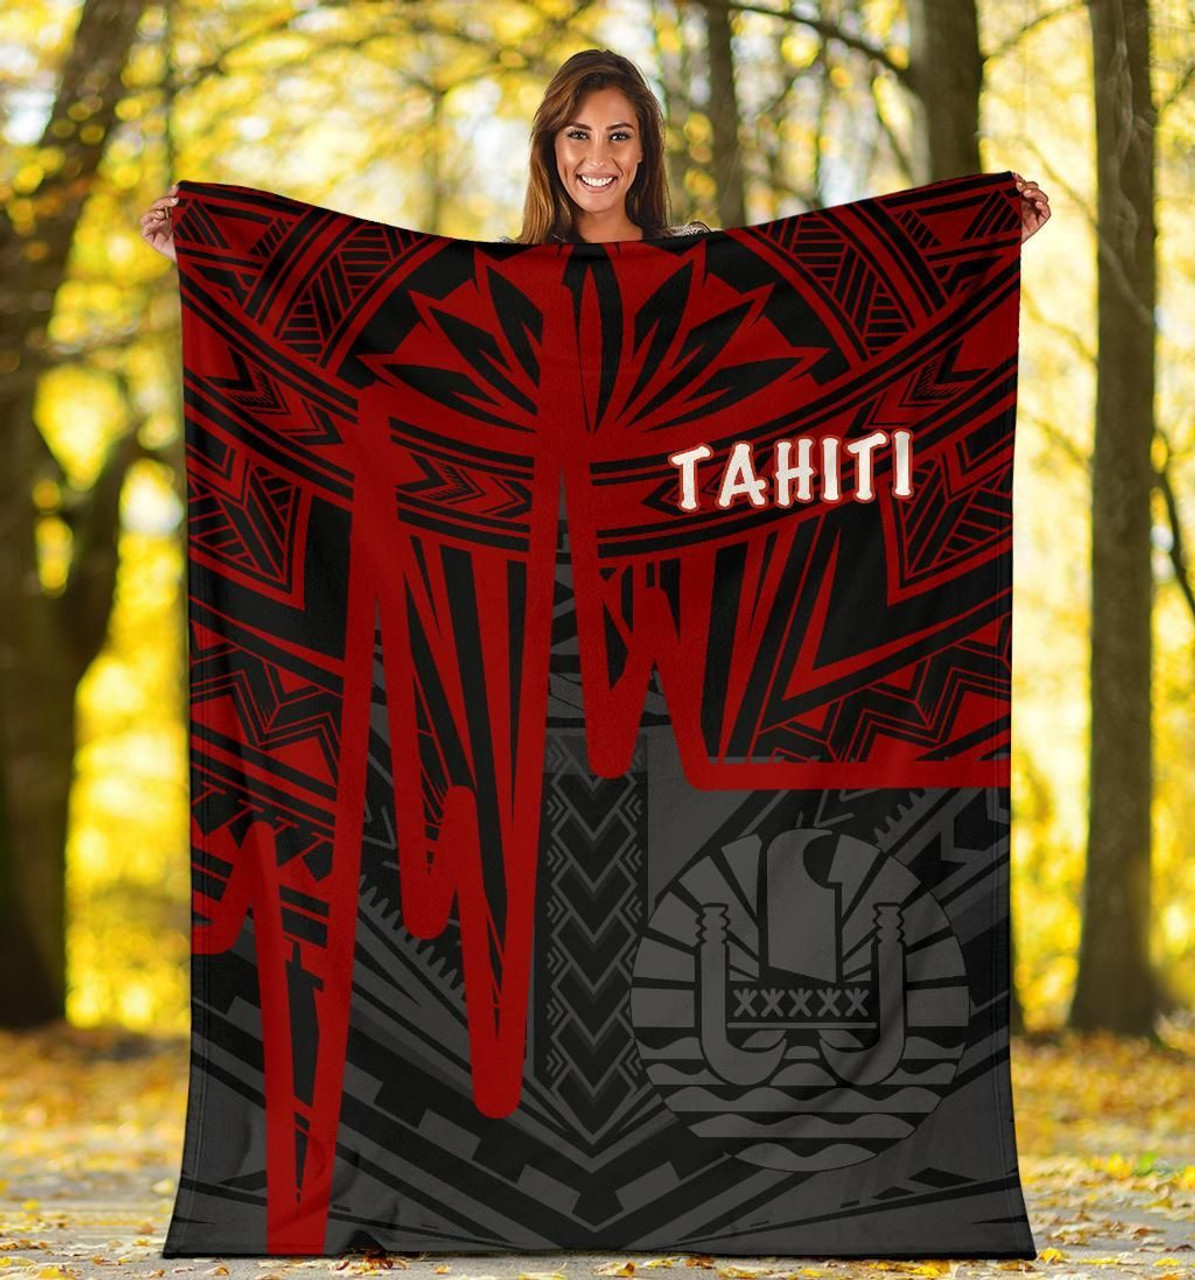 Tahiti Premium Blanket - Tahiti Seal In Heartbeat Patterns Style (Red) 5